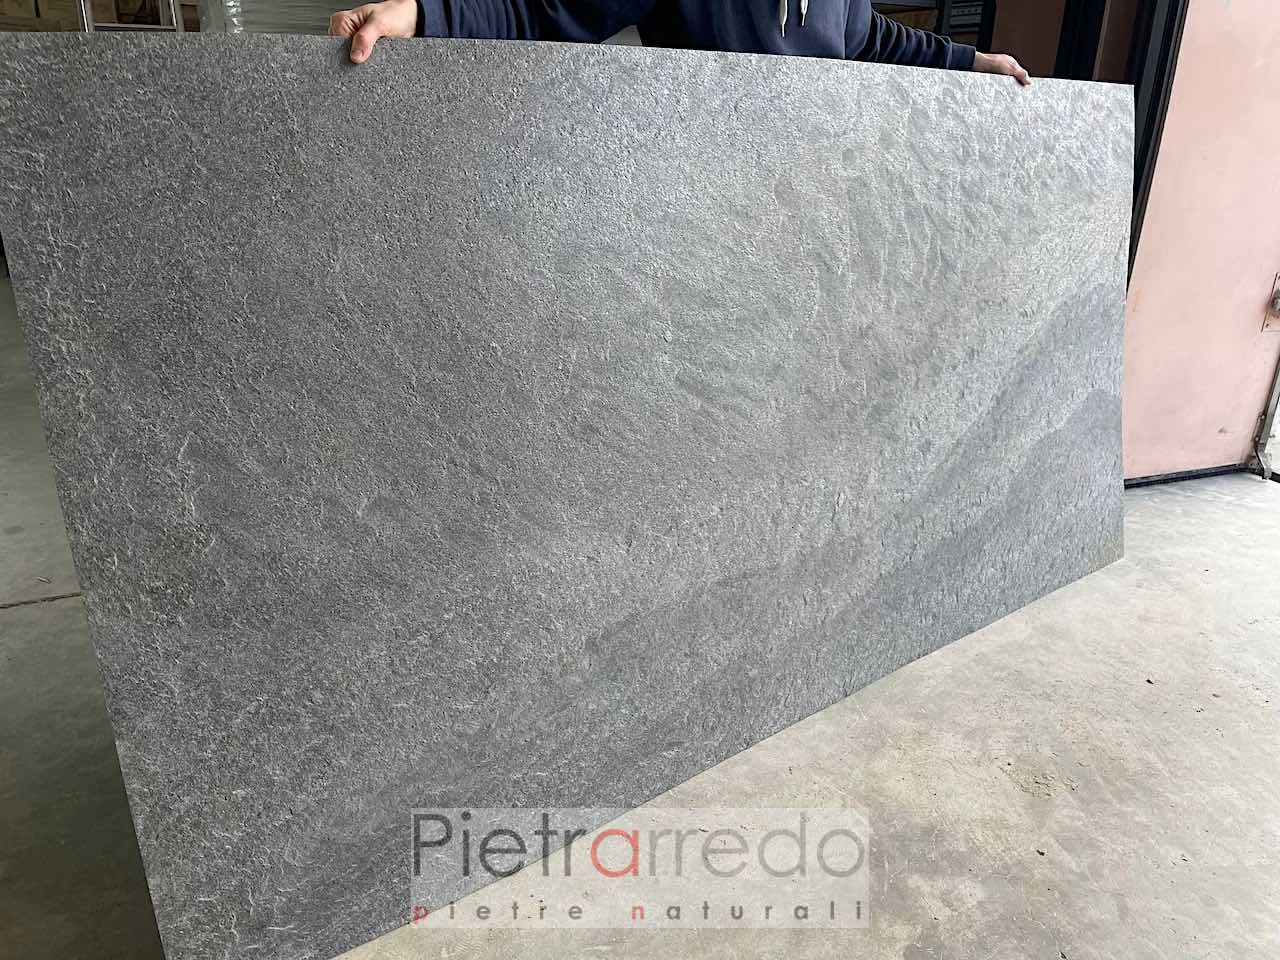 flexible natural black star stone sheet 244cm x 122cm pietrarredo price